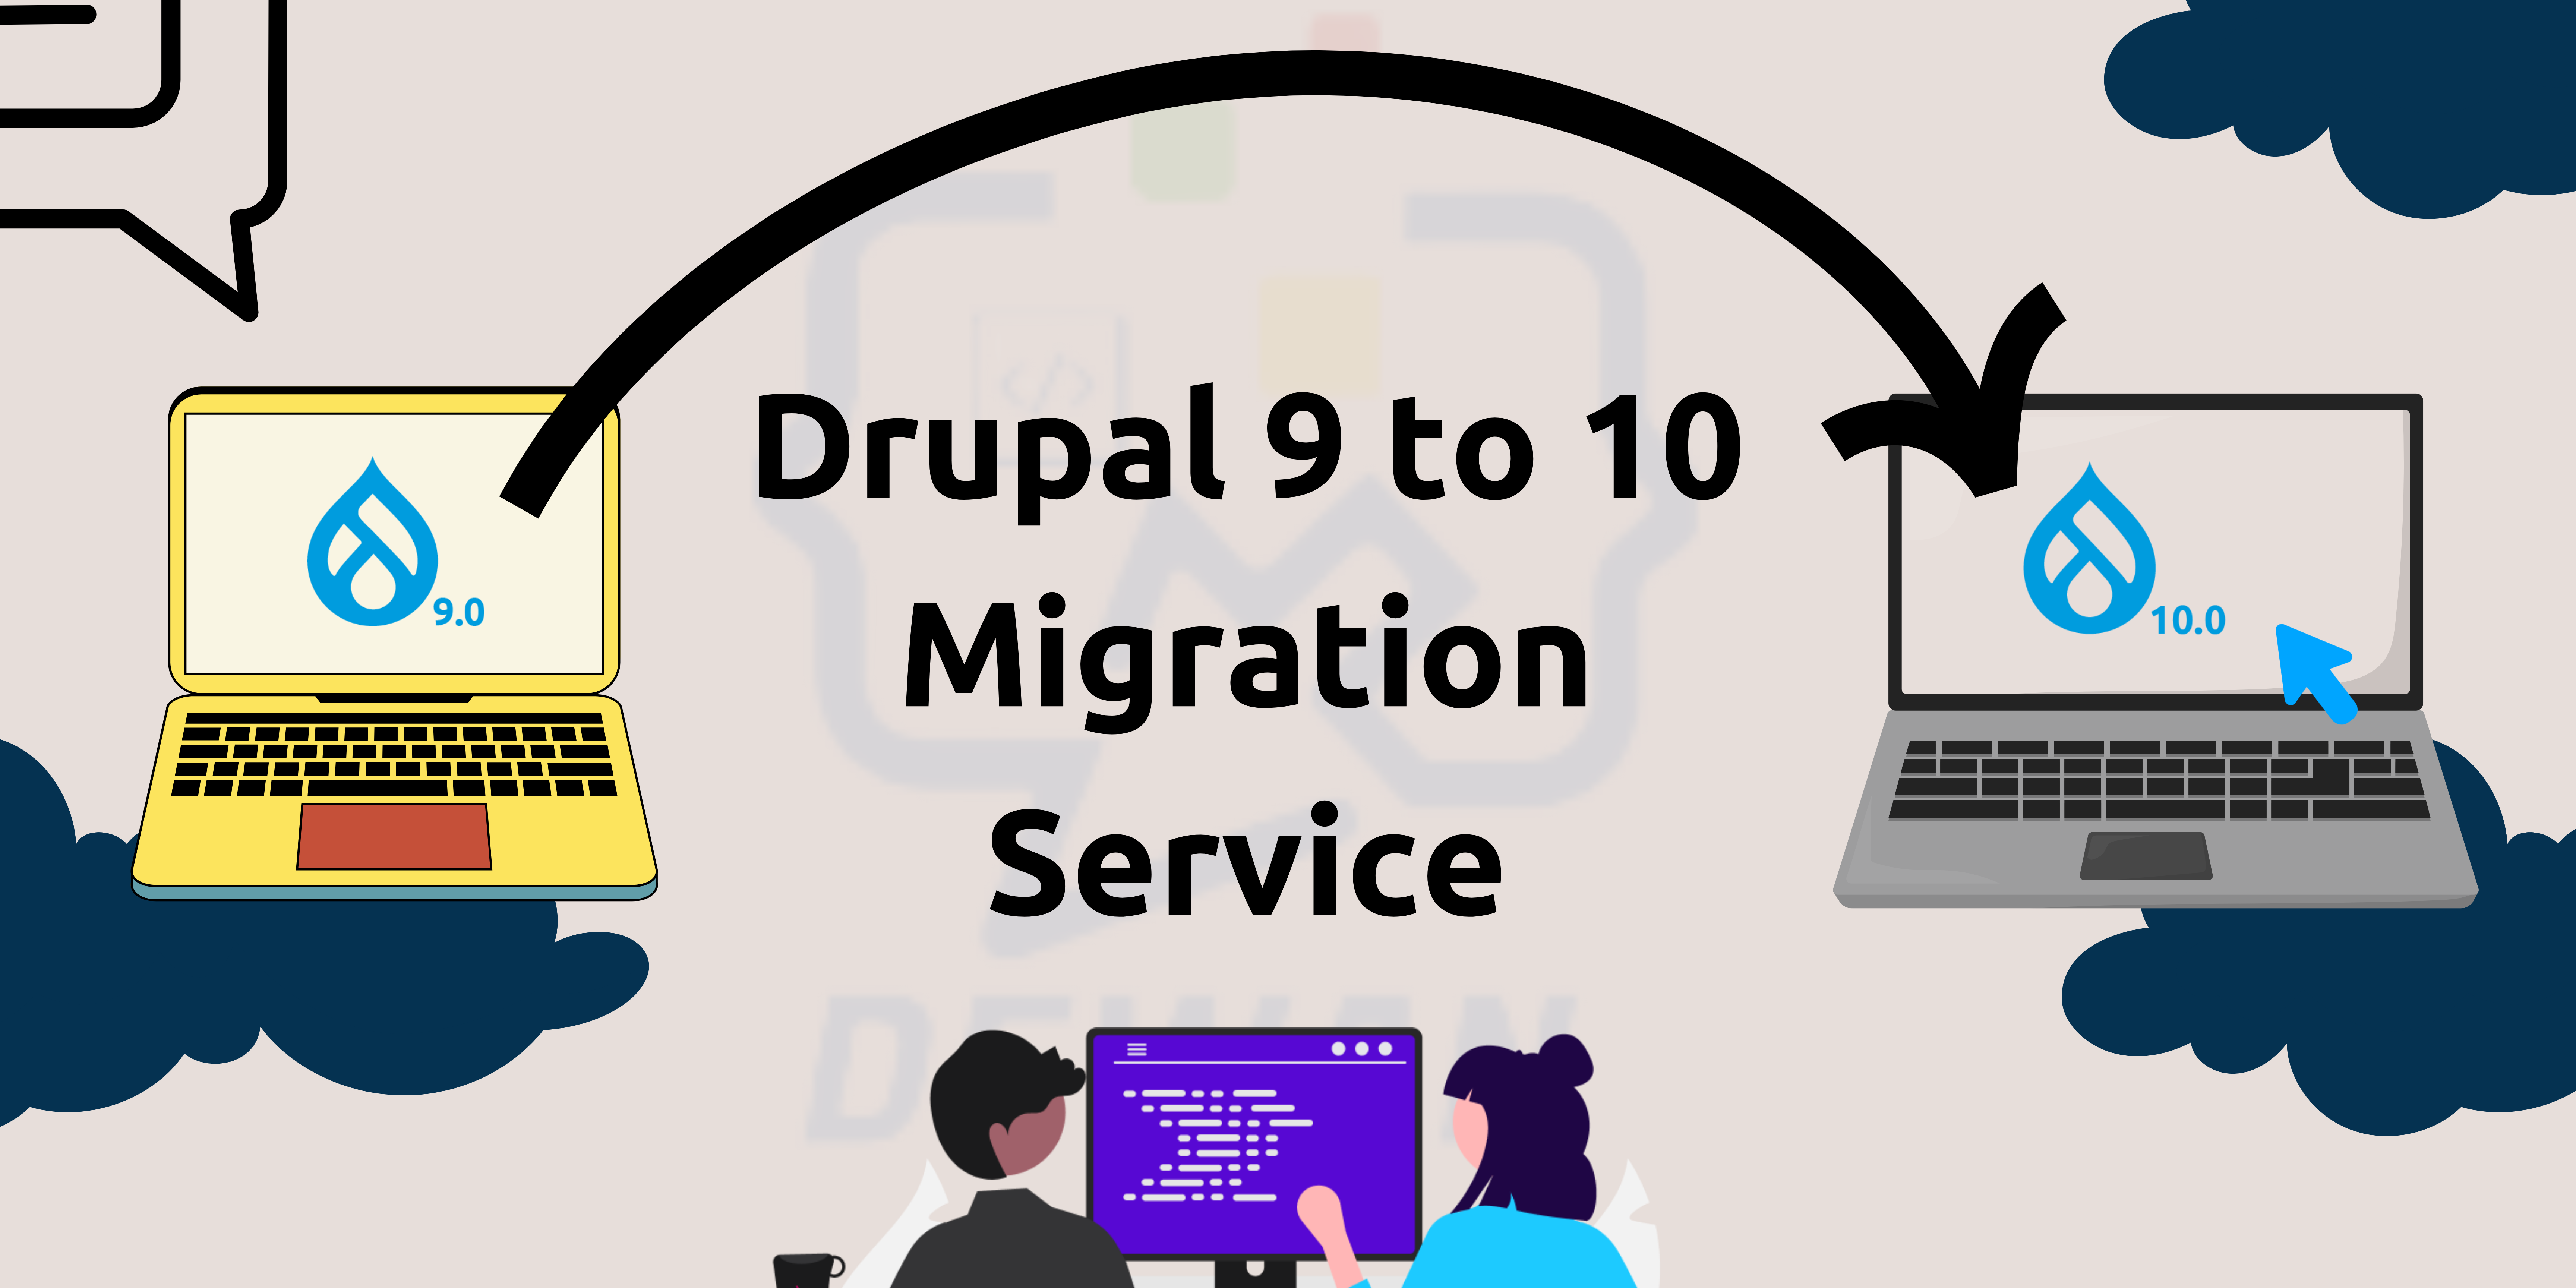 Drupal 9 to 10 Migration Services